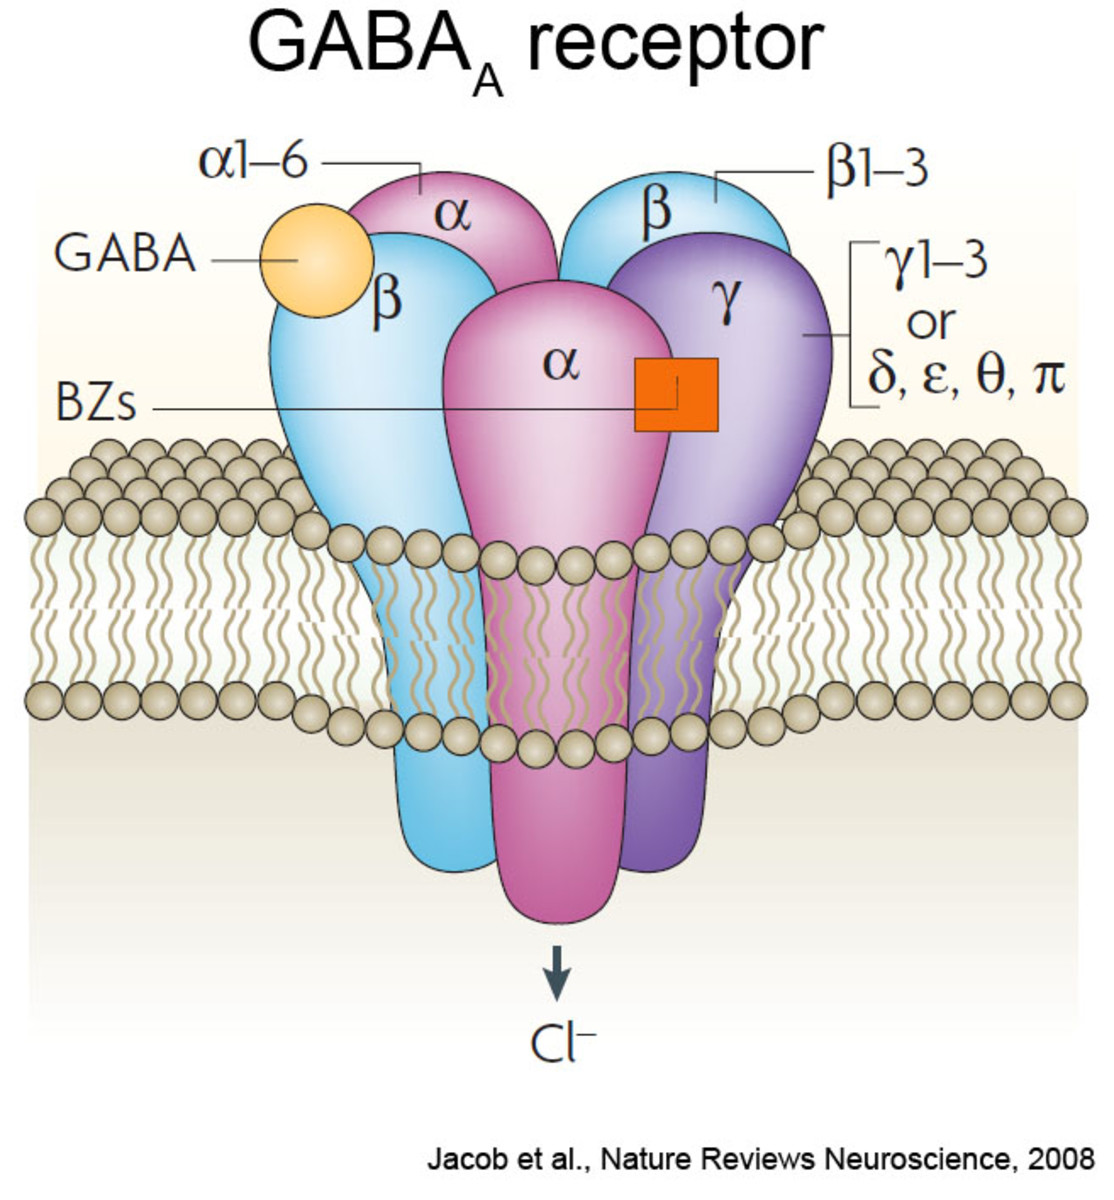 GABA type A receptor